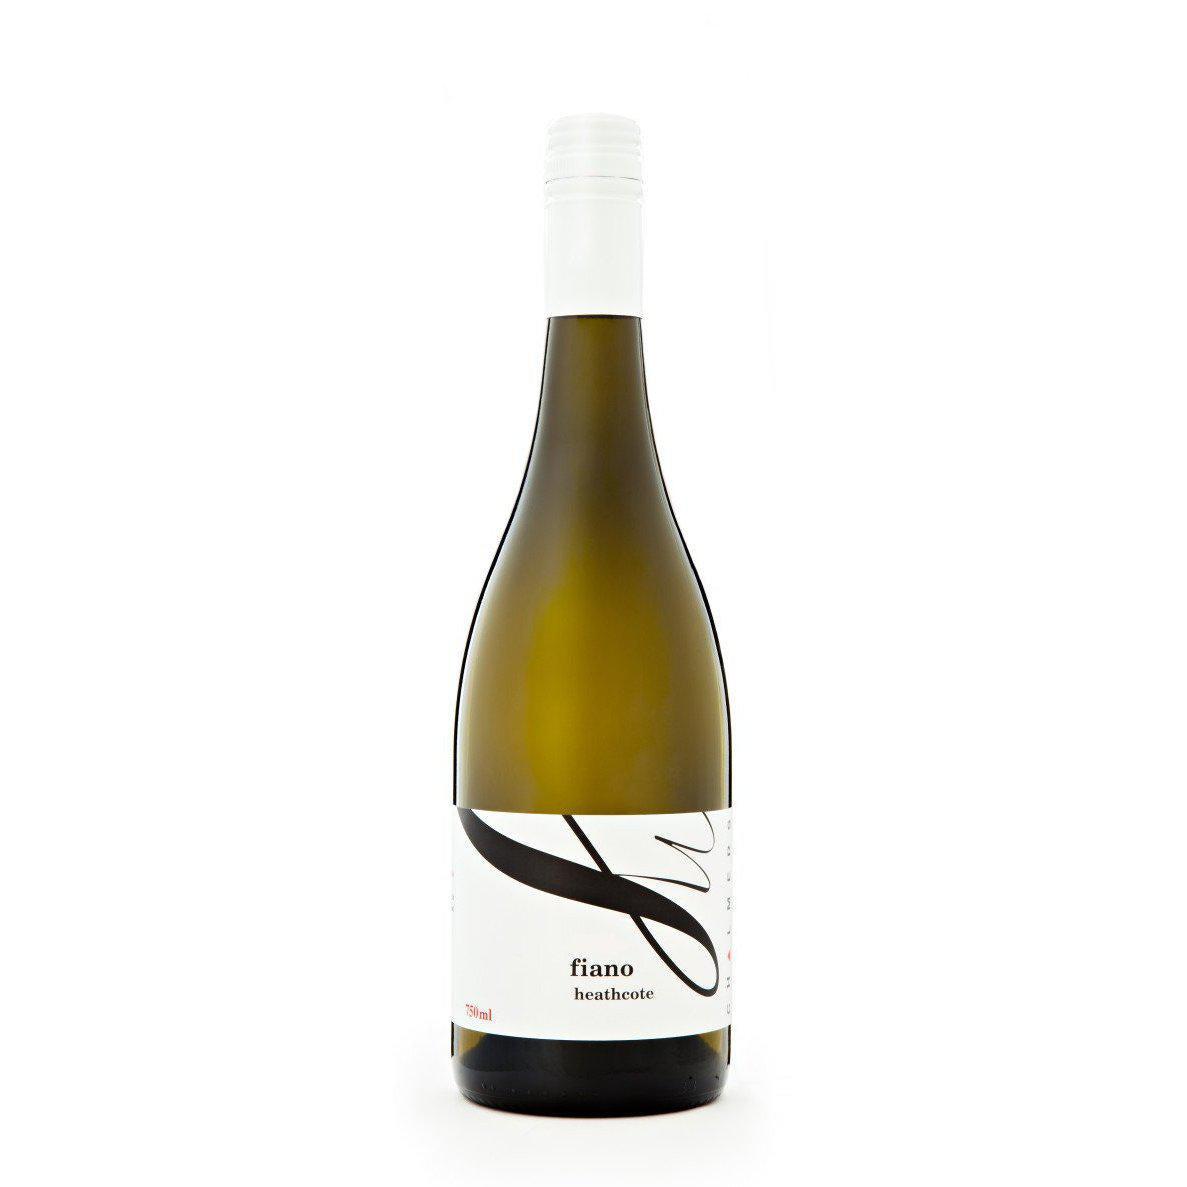 Chalmers Fiano 2021 (6 Bottle Case)-White Wine-World Wine